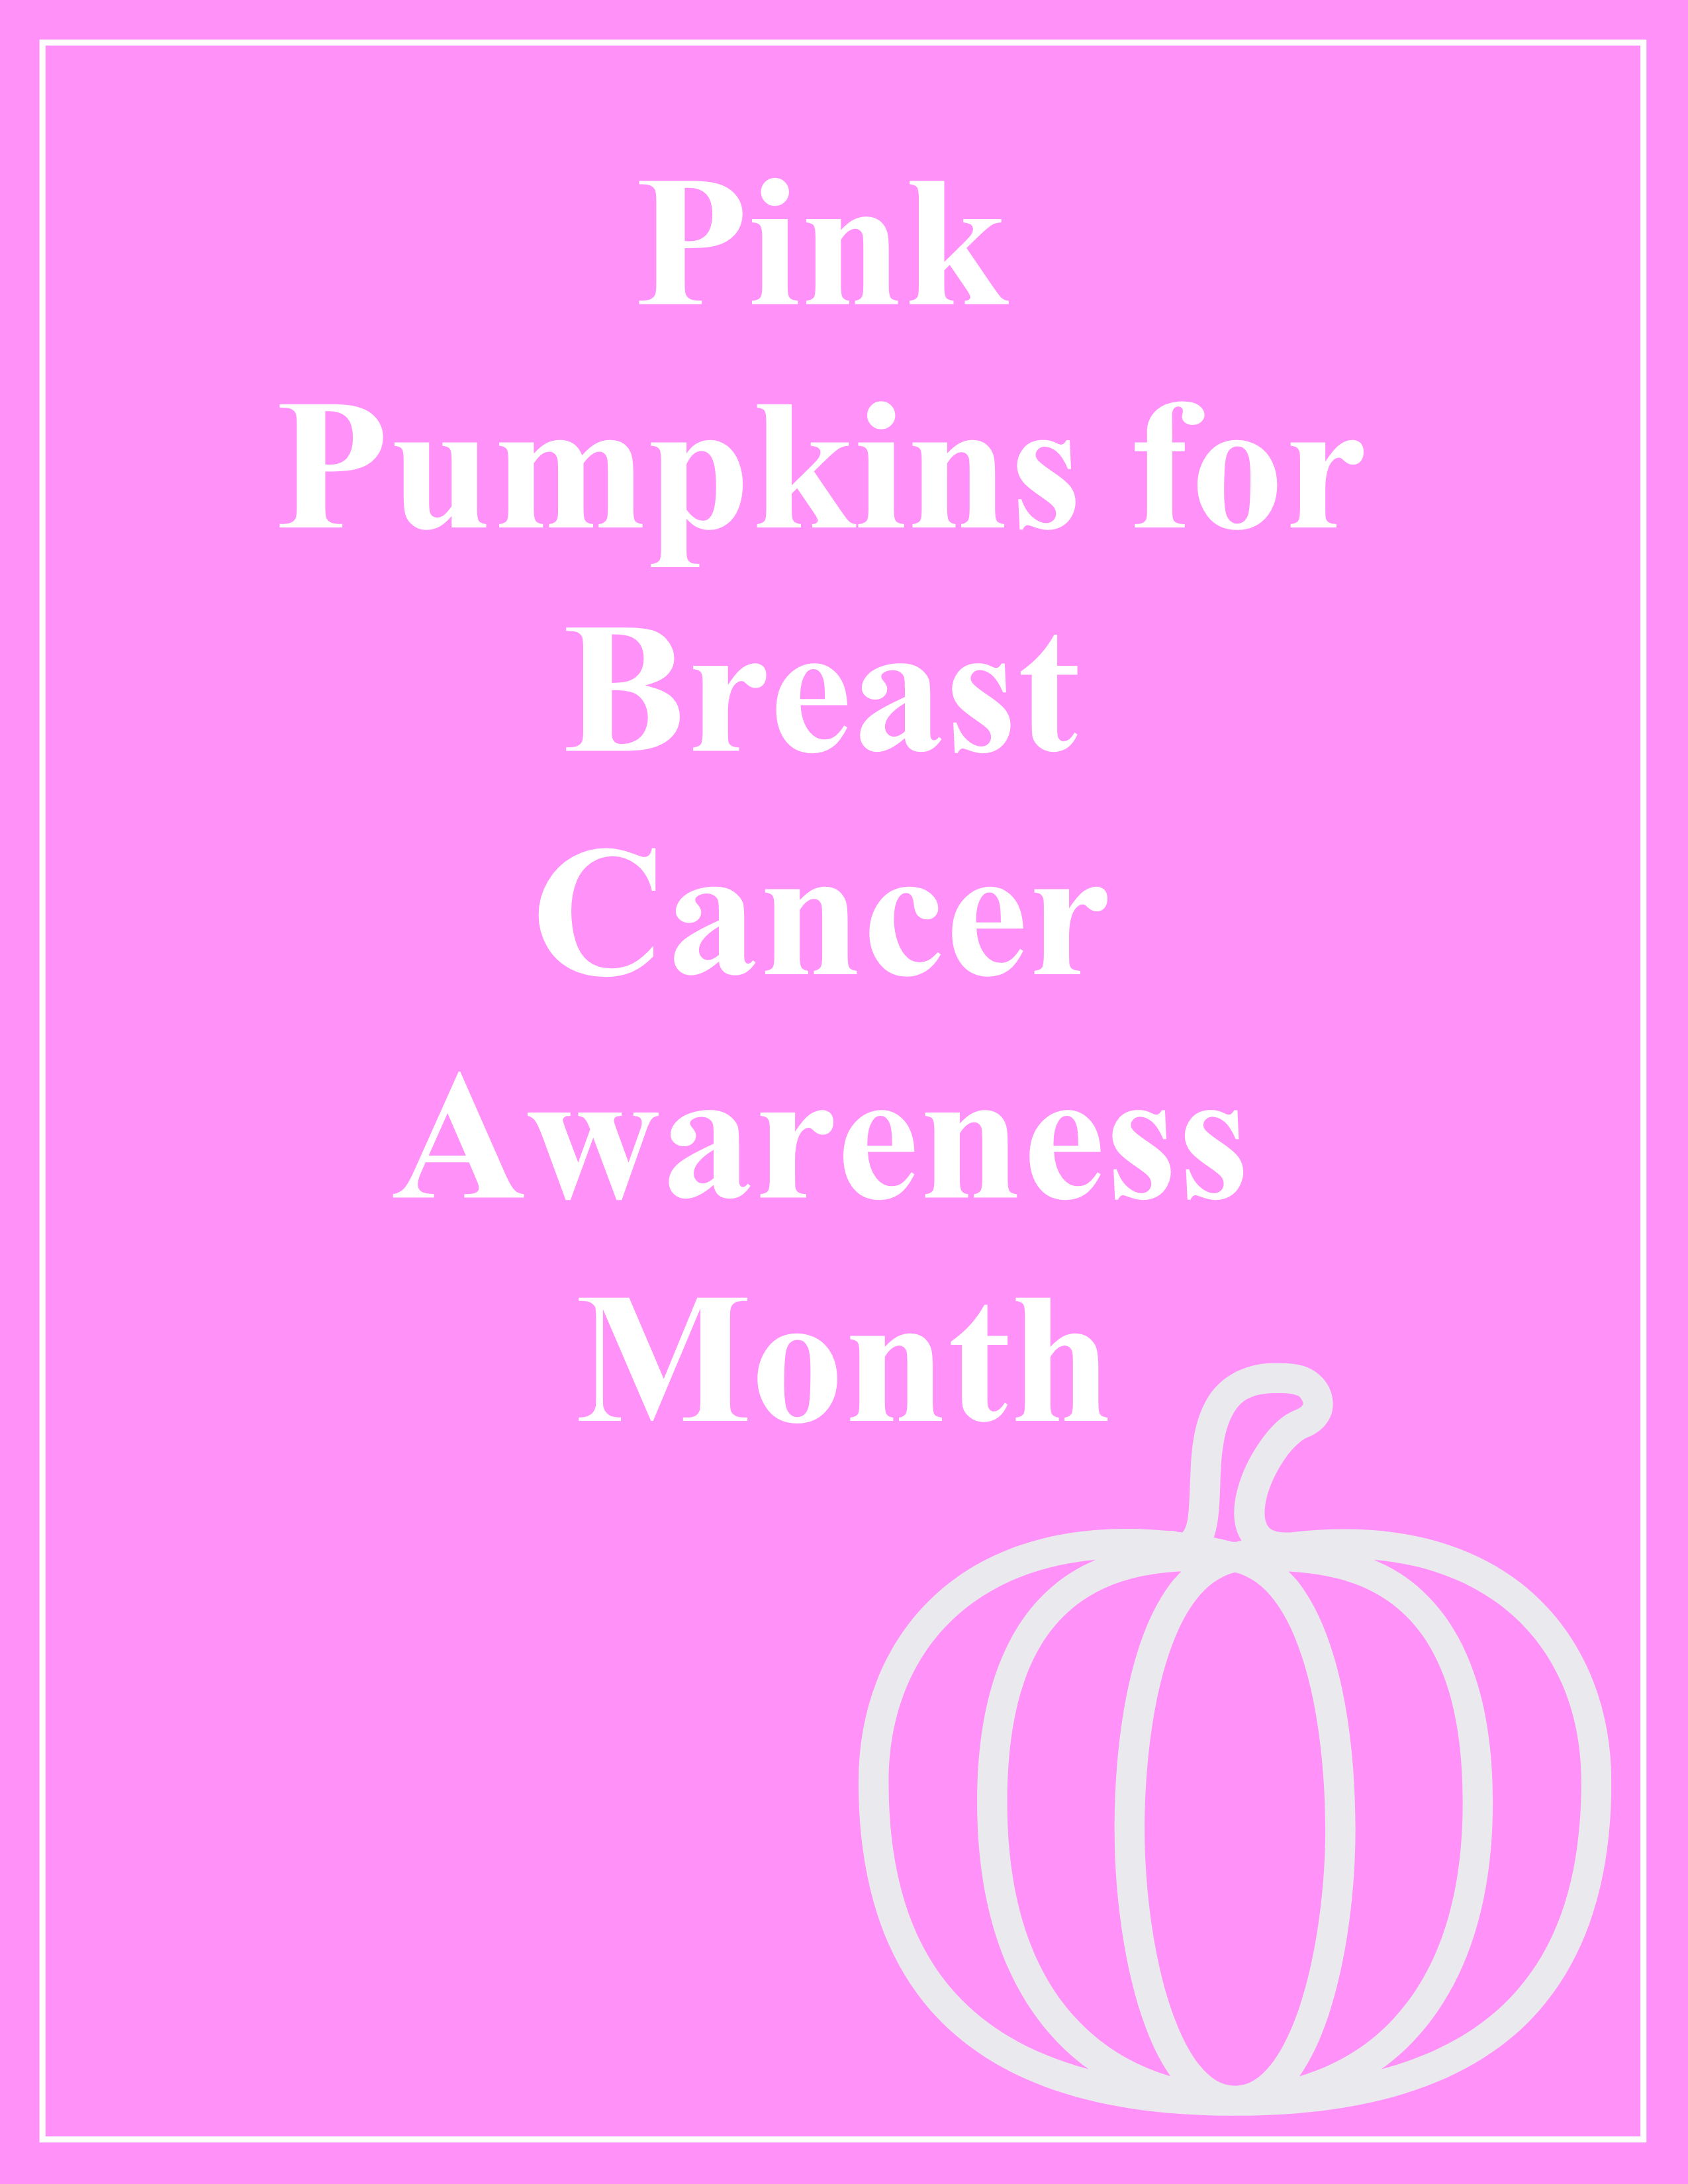 Pink Pumpkins for Breast Cancer Awareness Month